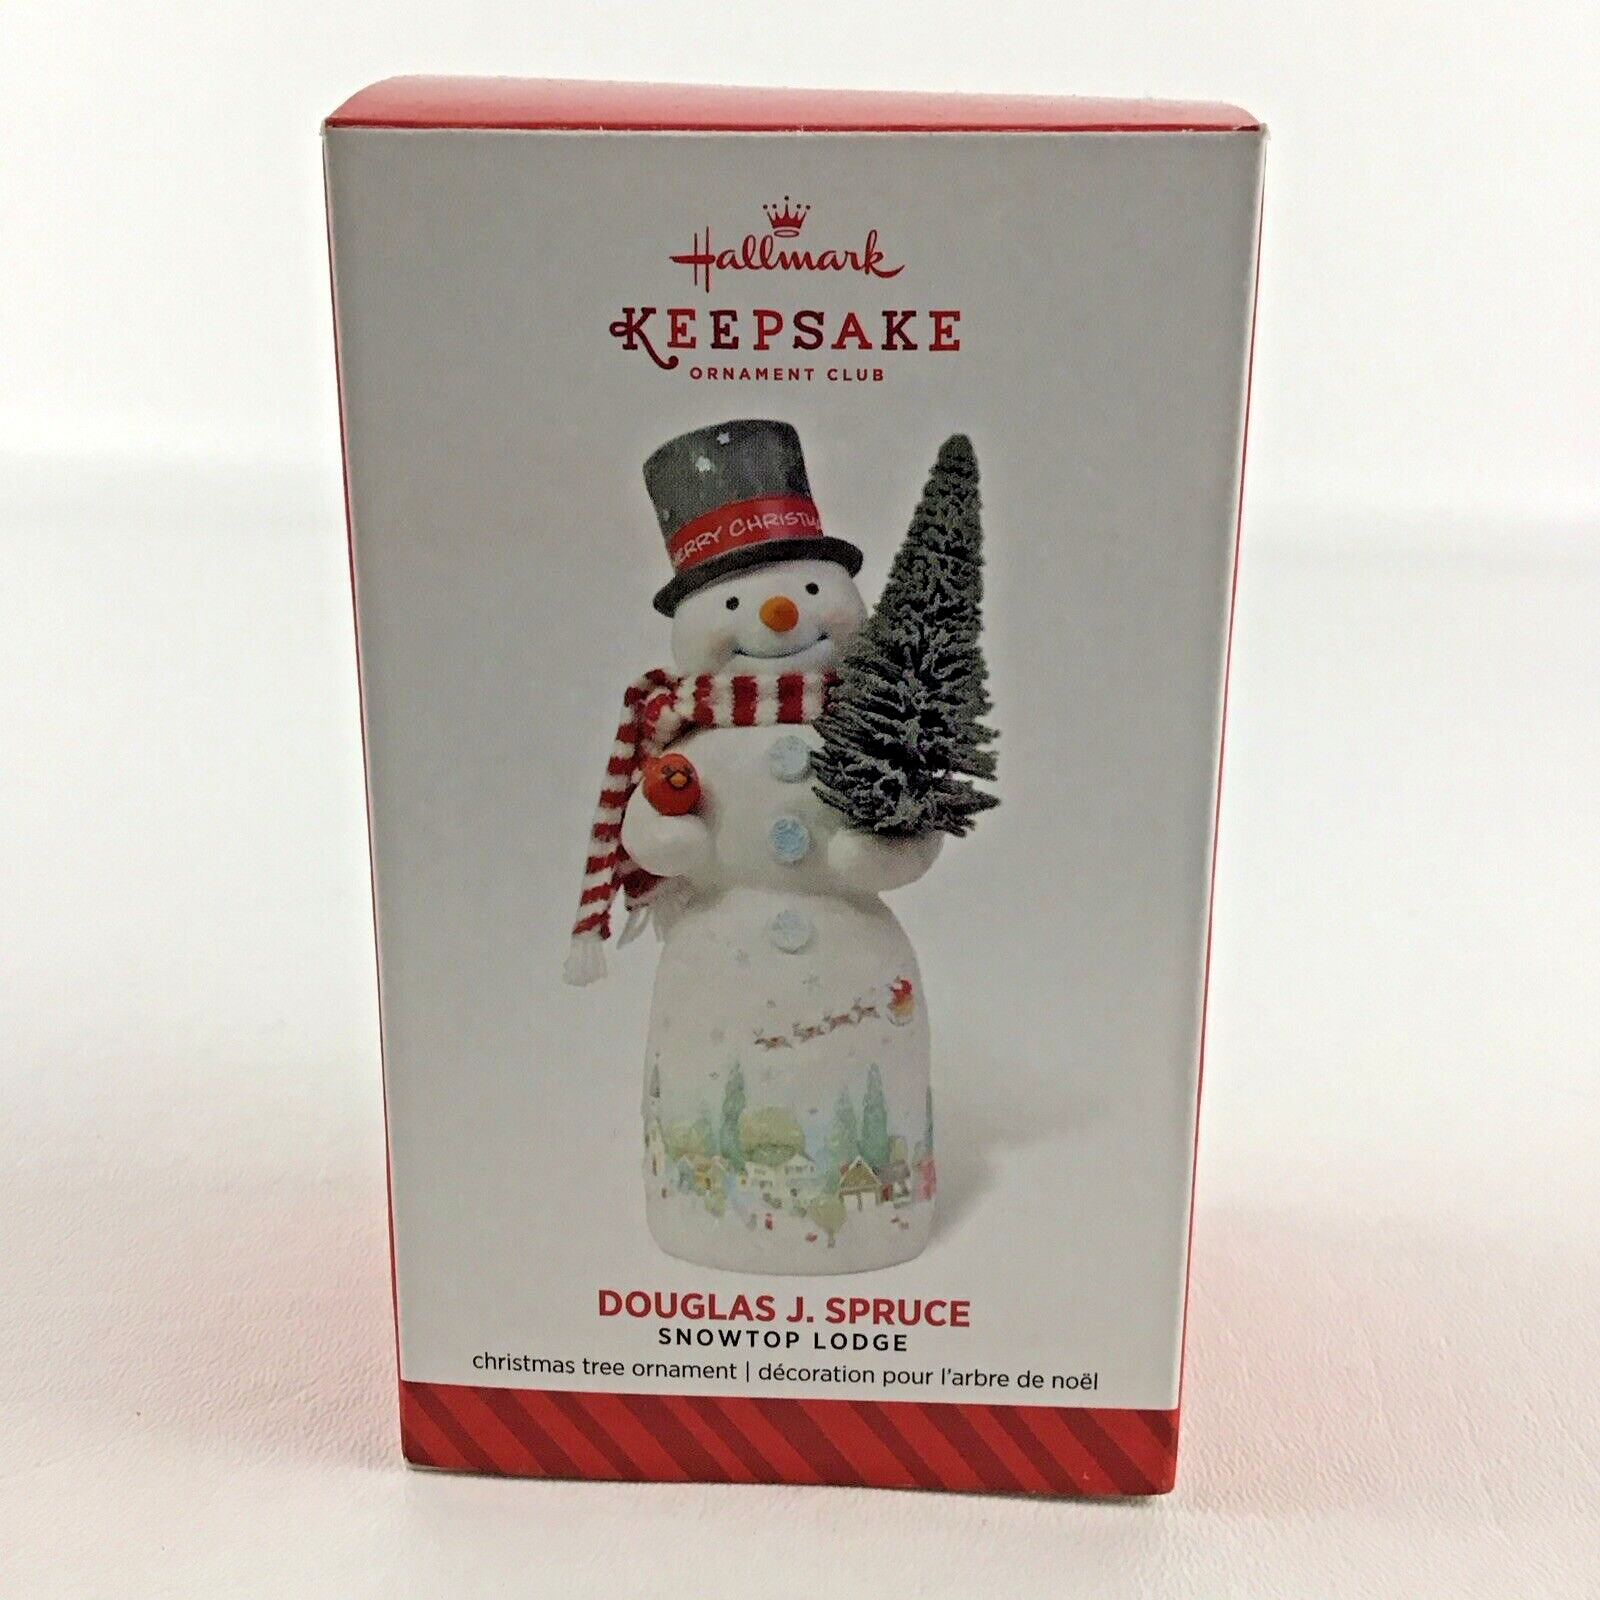 Hallmark Keepsake Christmas Ornament Snowtop Lodge Douglas J. Spruce 2014 New